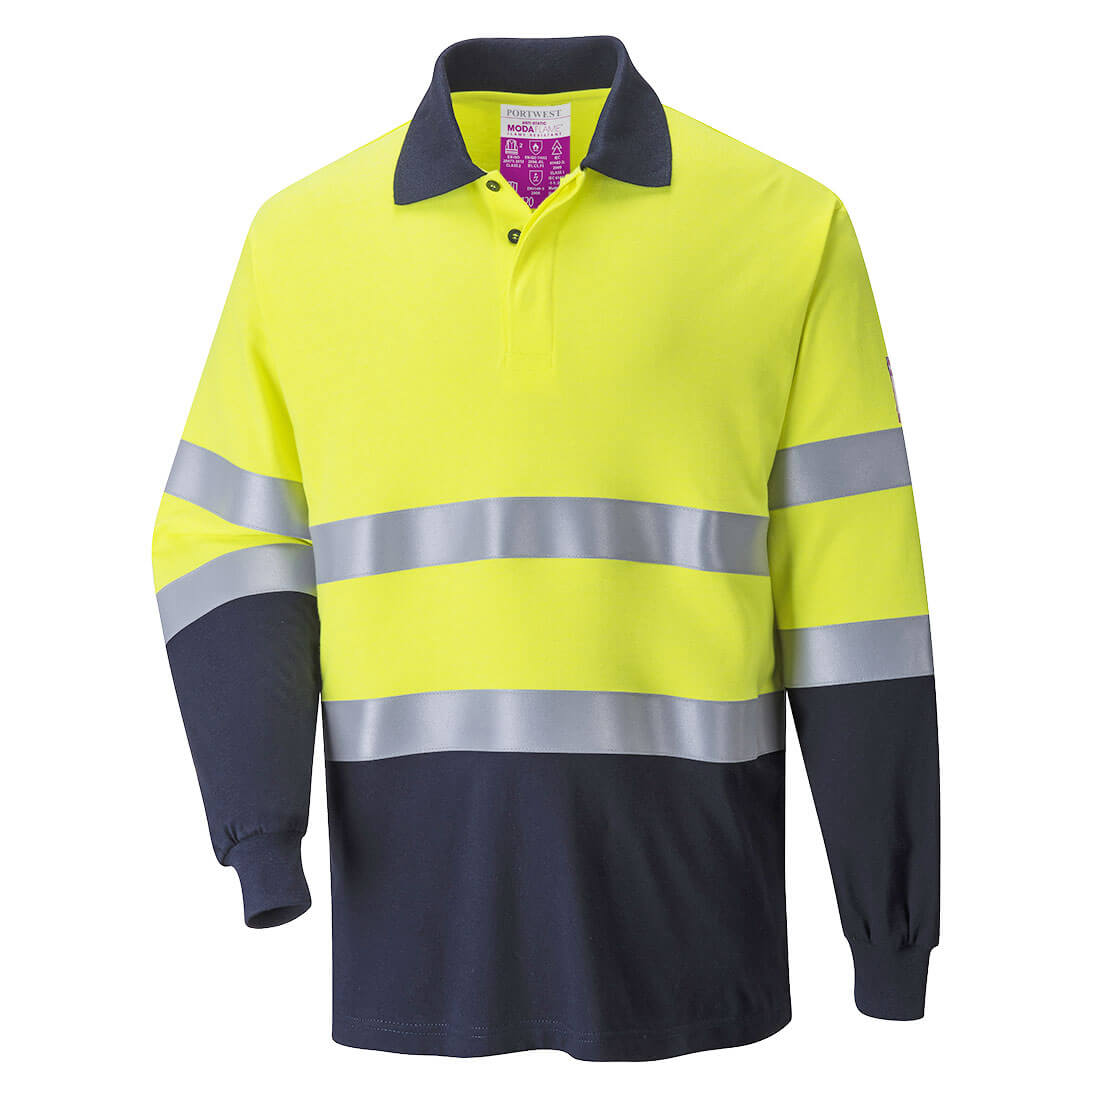 Image of Modaflame Mens Flame Resistant Hi Vis 2-Tone Polo Shirt Yellow / Navy M